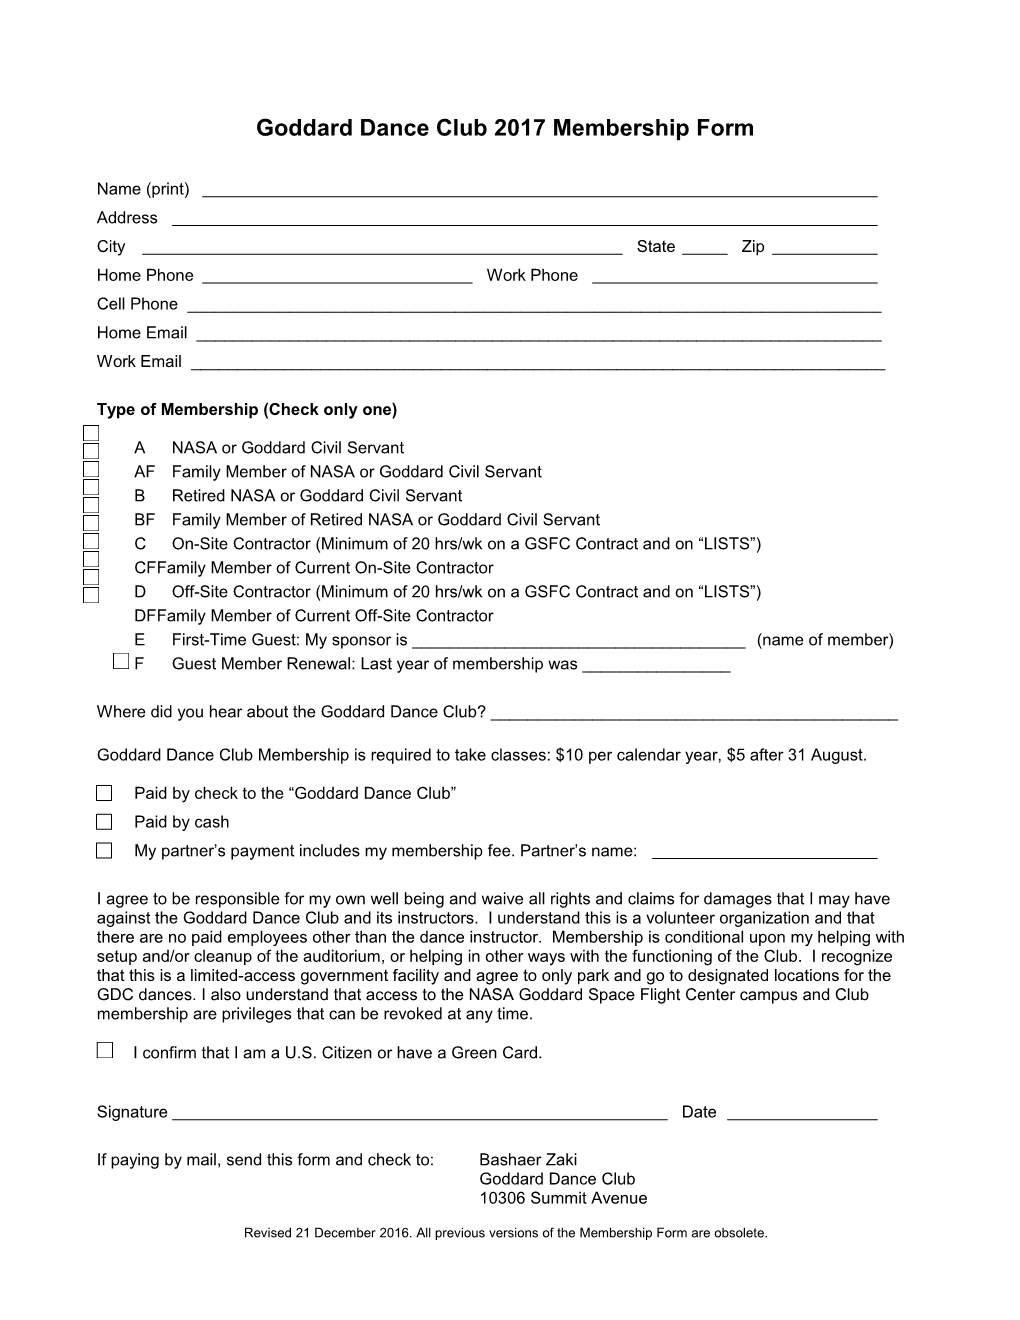 Goddard Dance Club Membership Application